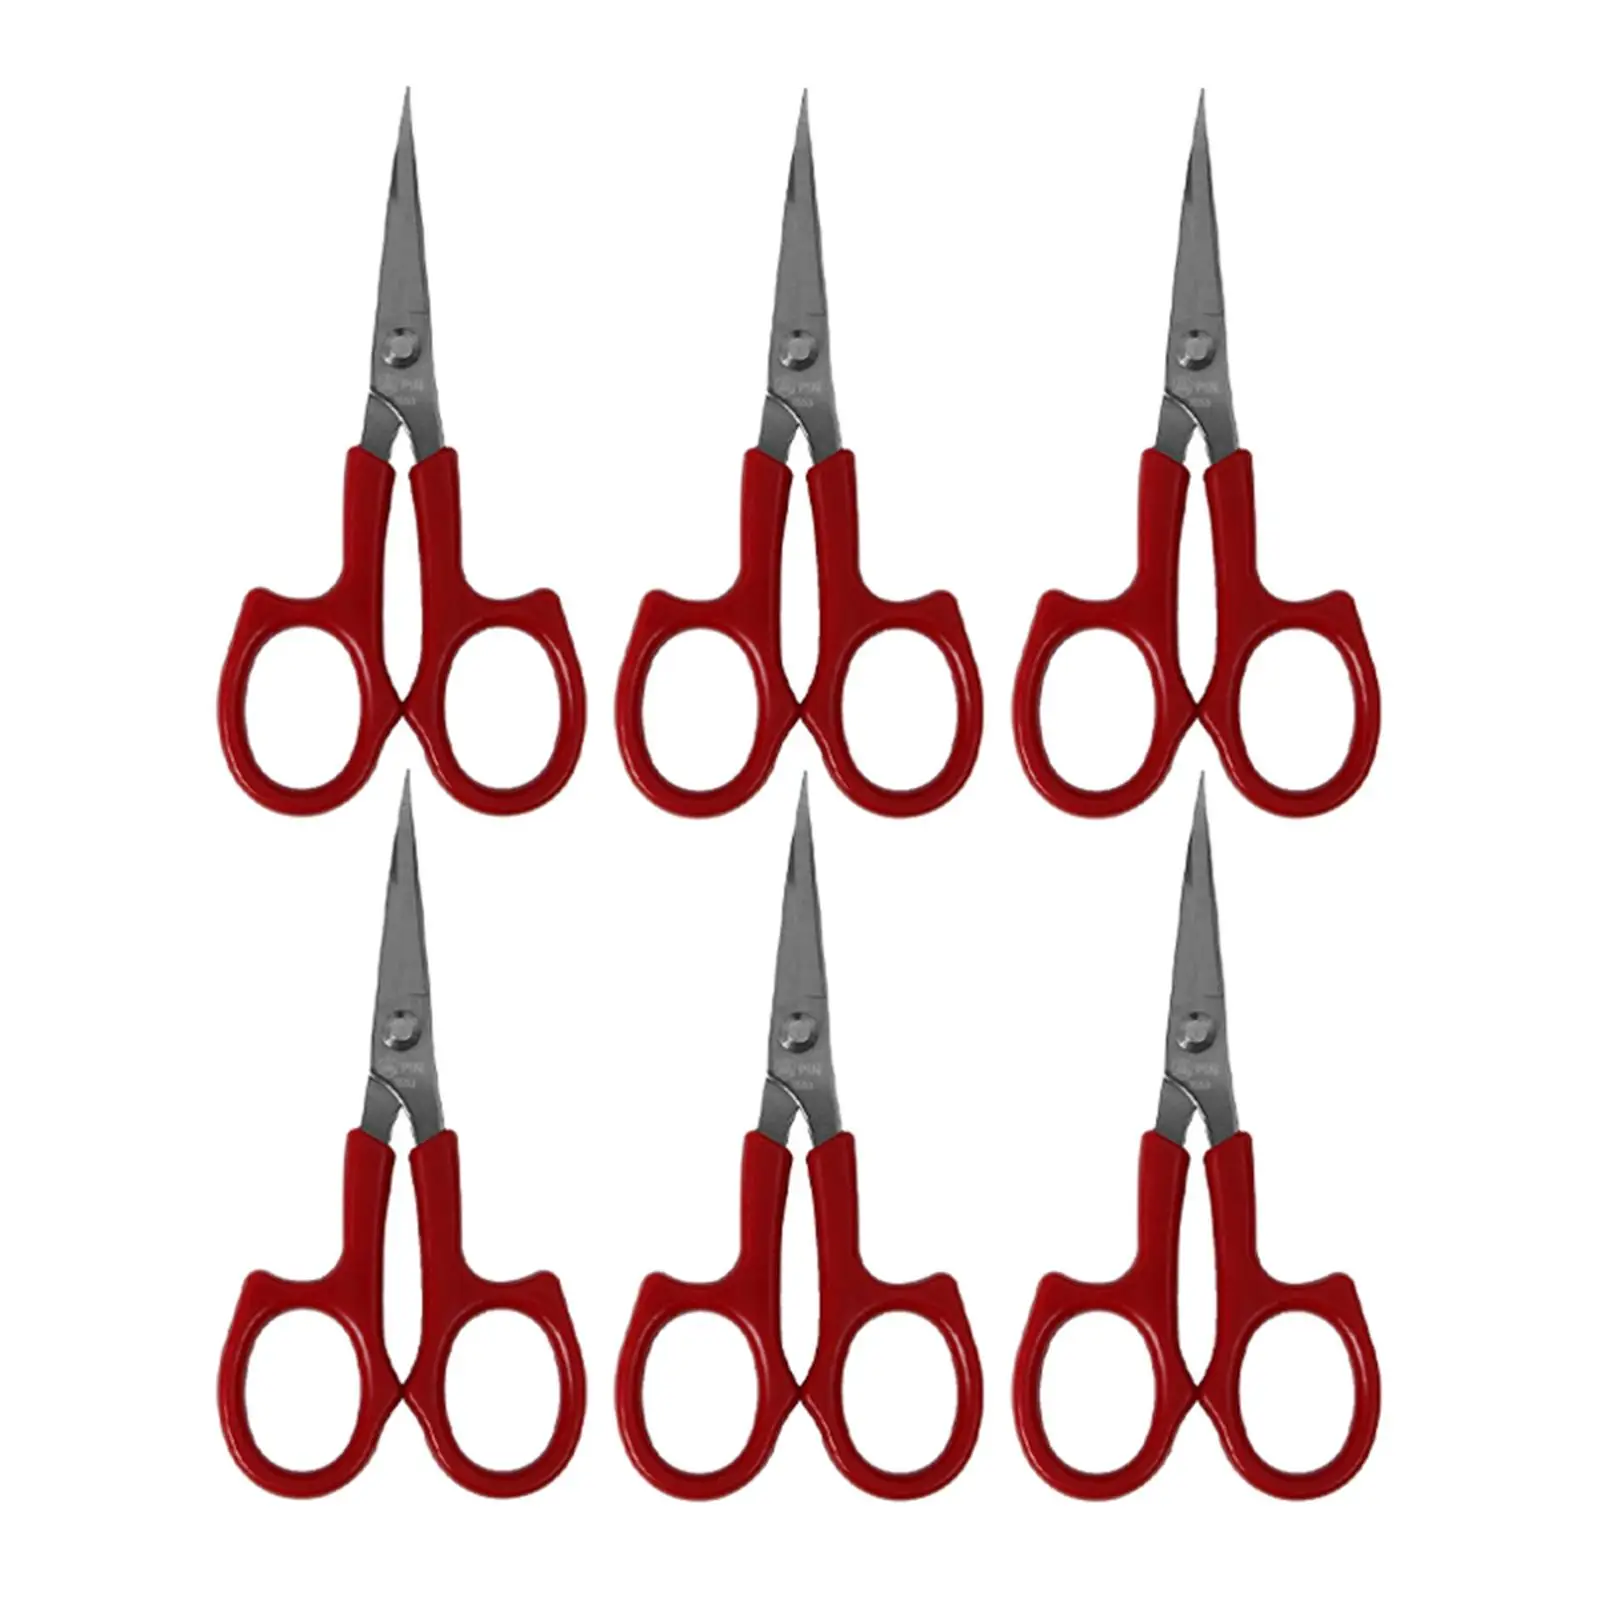 6 Pieces Embroidery Scissors Head up for Needlecraft Craft DIY Cross Stitch